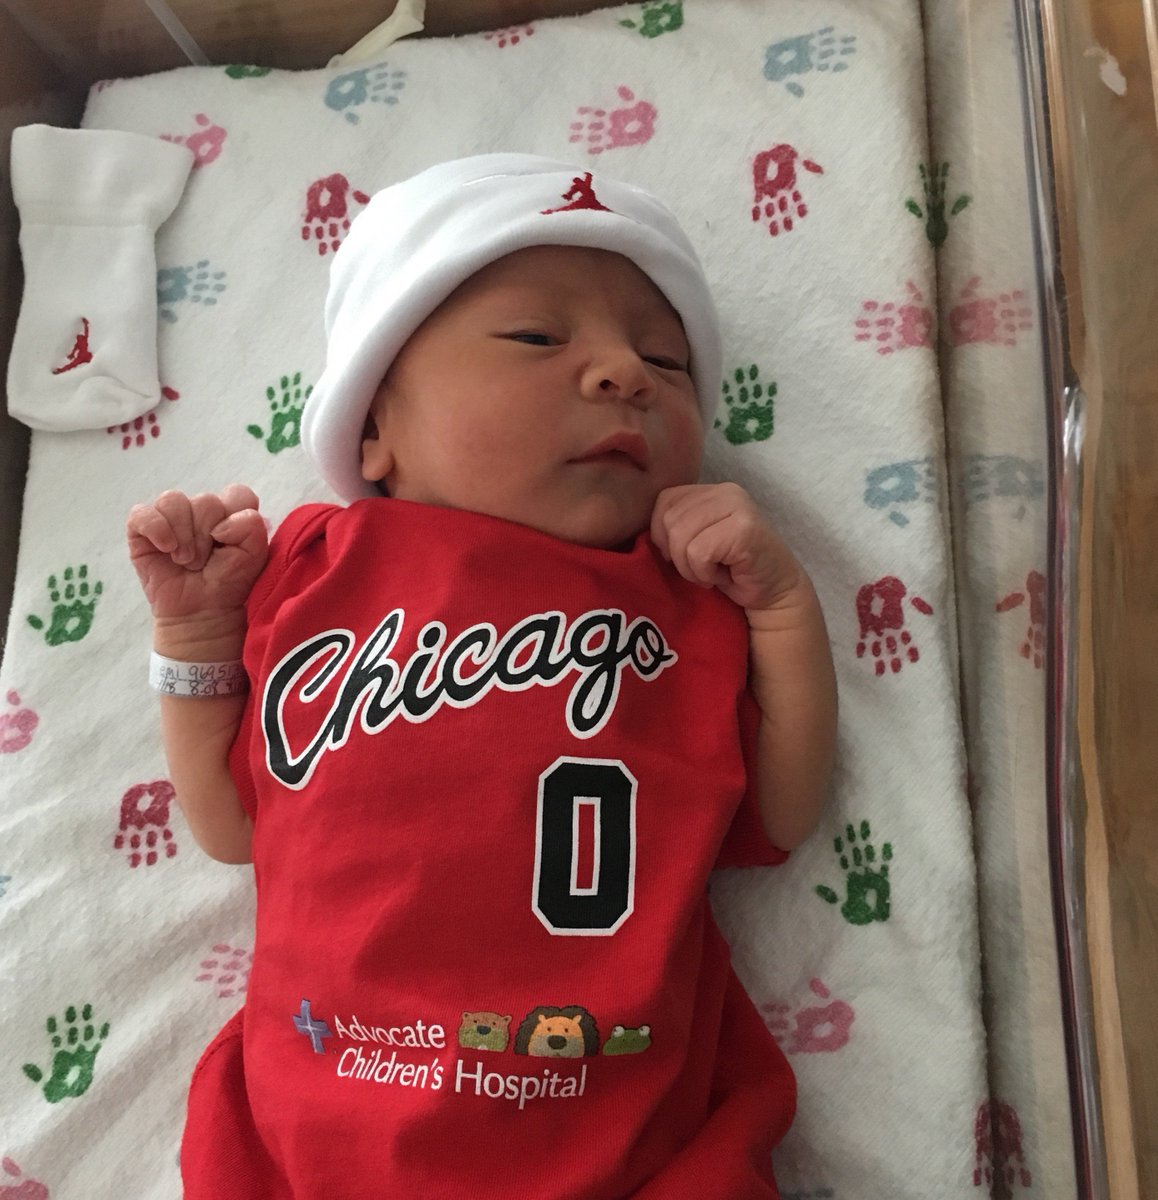 baby chicago bulls jersey